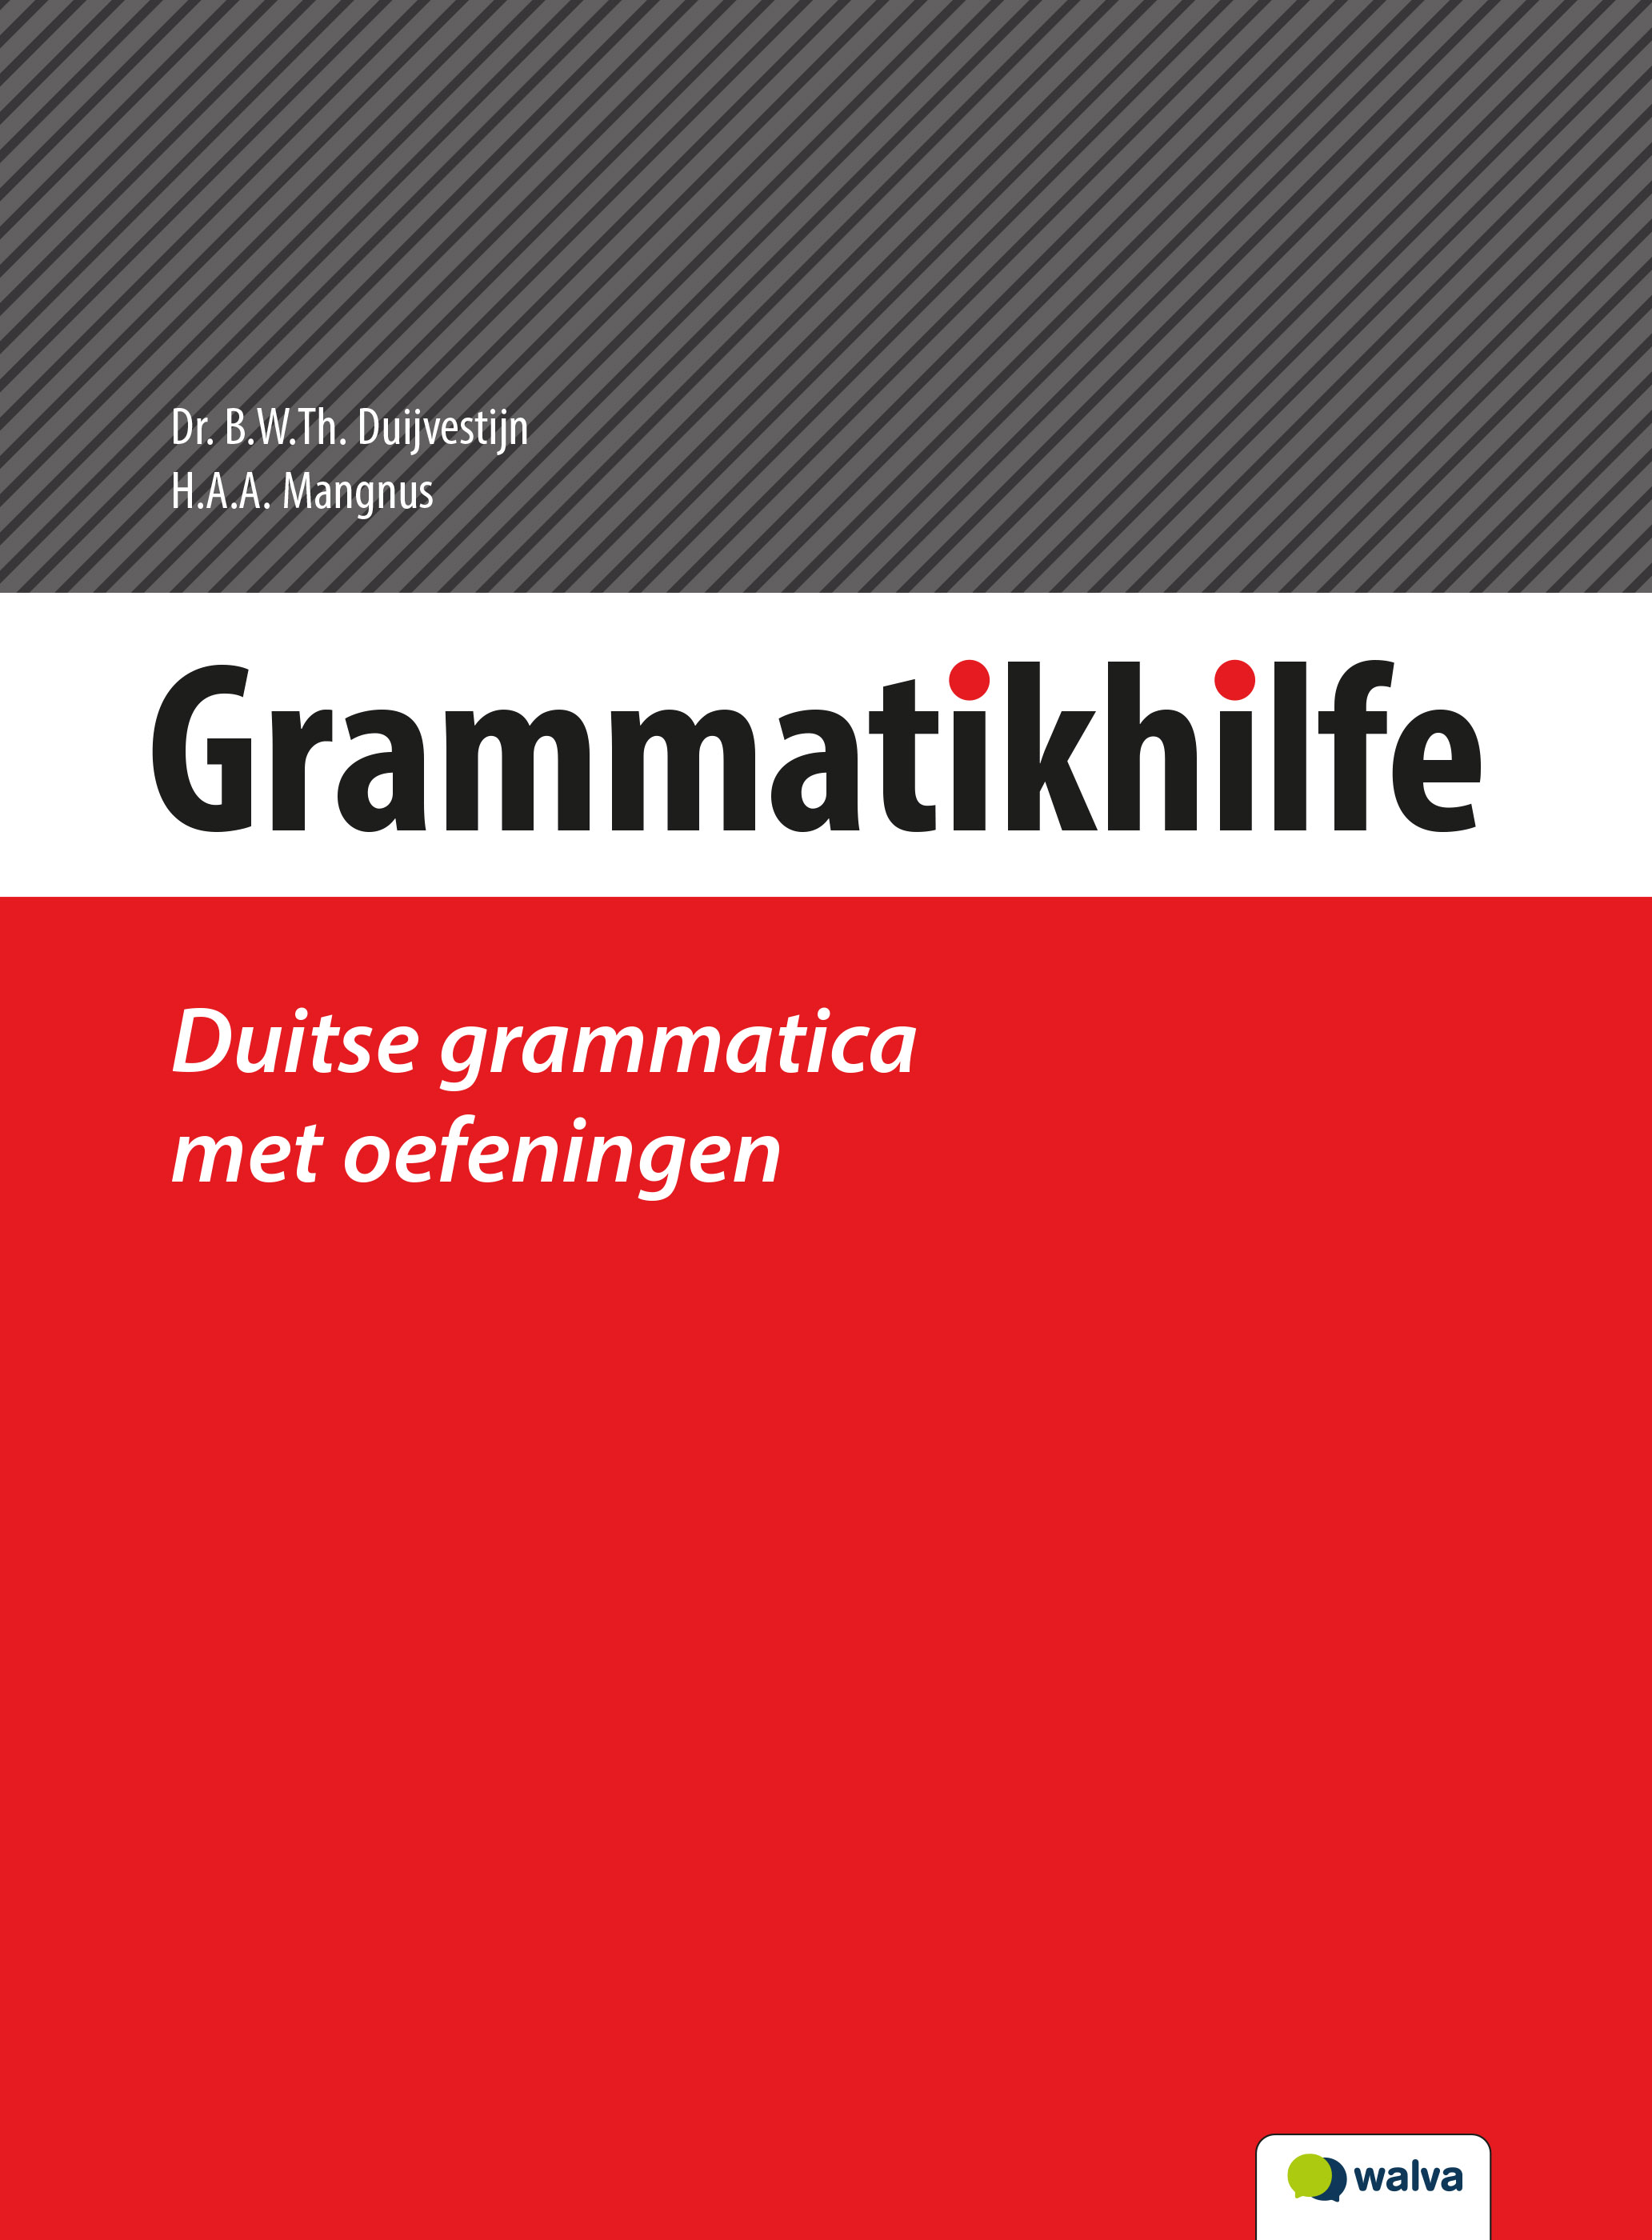 WDXGRM002 Grammatikhilfe, beoordelingsexemplaar